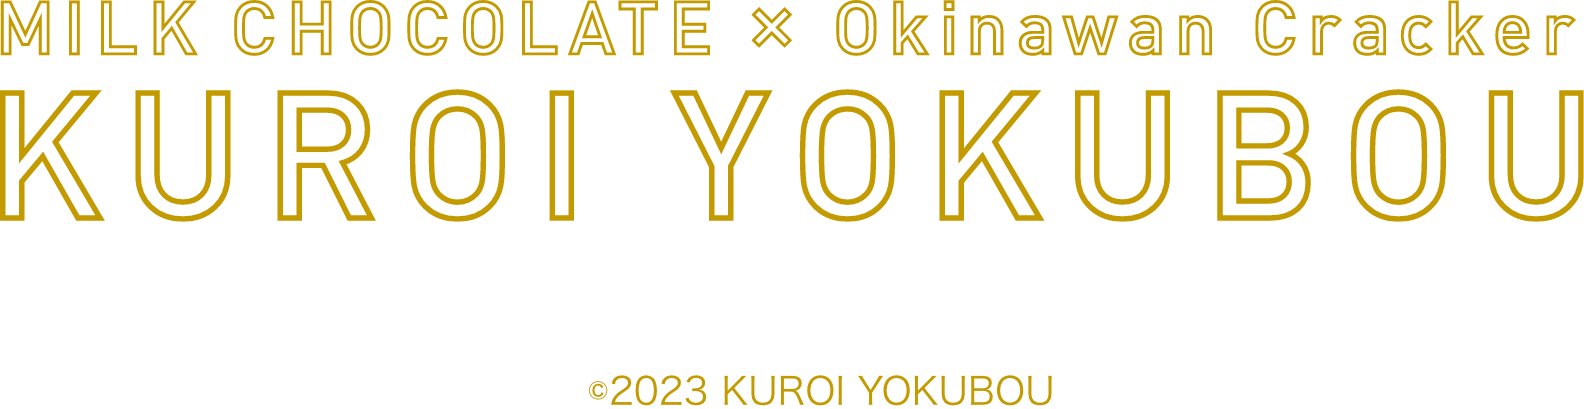 MILK CHOCOLATE × Okinawan Cracker KUROI YOKUBOU ©2023 KUROI YOKUBOU